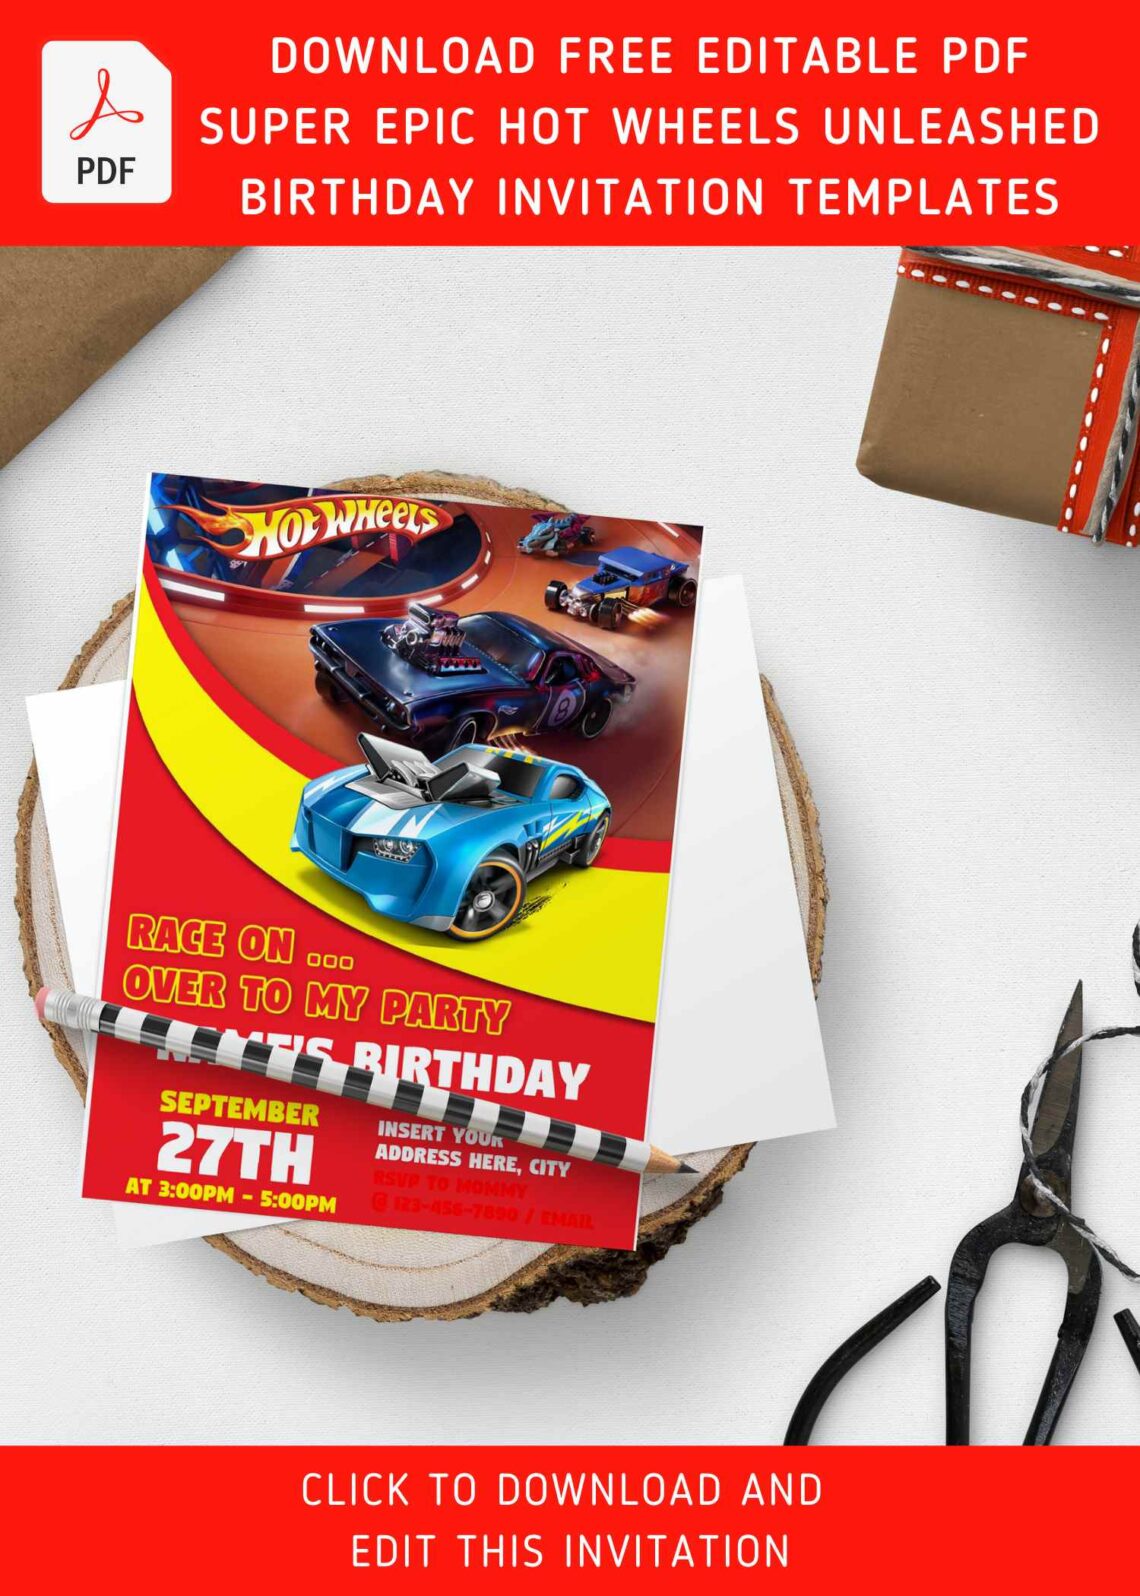 (Free Editable PDF) Hot Wheels Wild Racer Birthday Invitation Templates with a